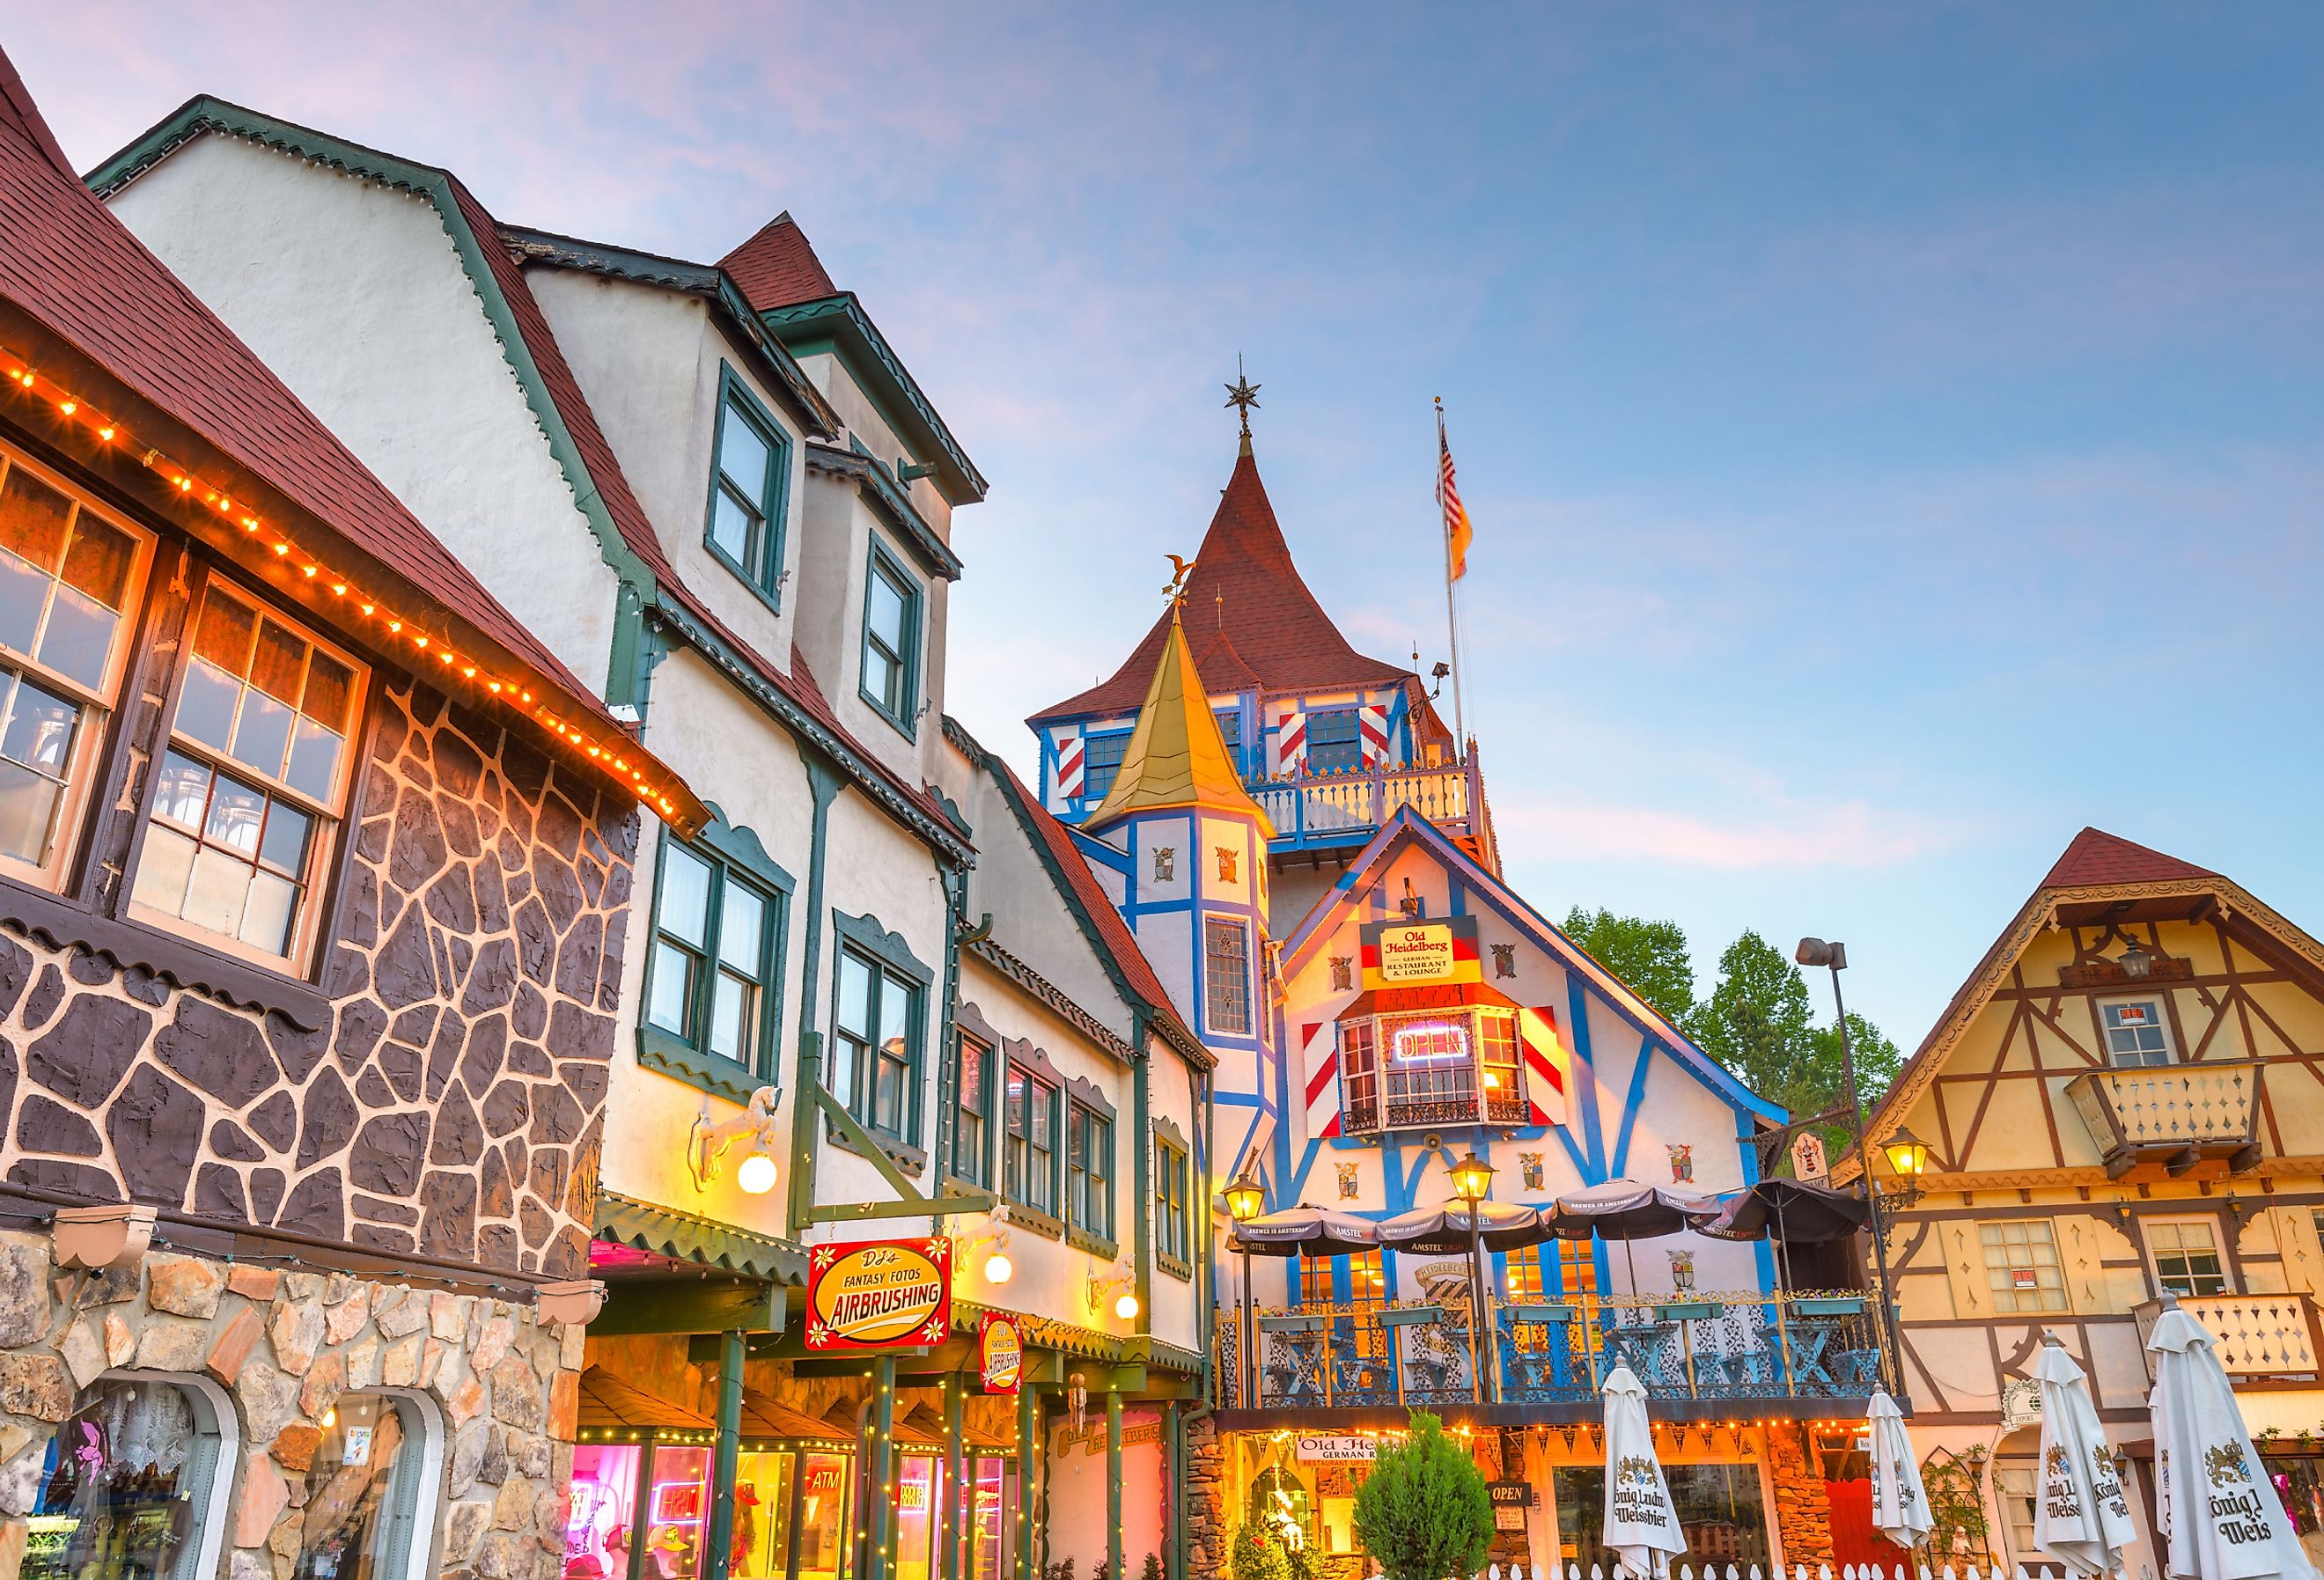 Bavarian-style city of Helen, Georgia. Image credit Sean Pavone via Shutterstock.